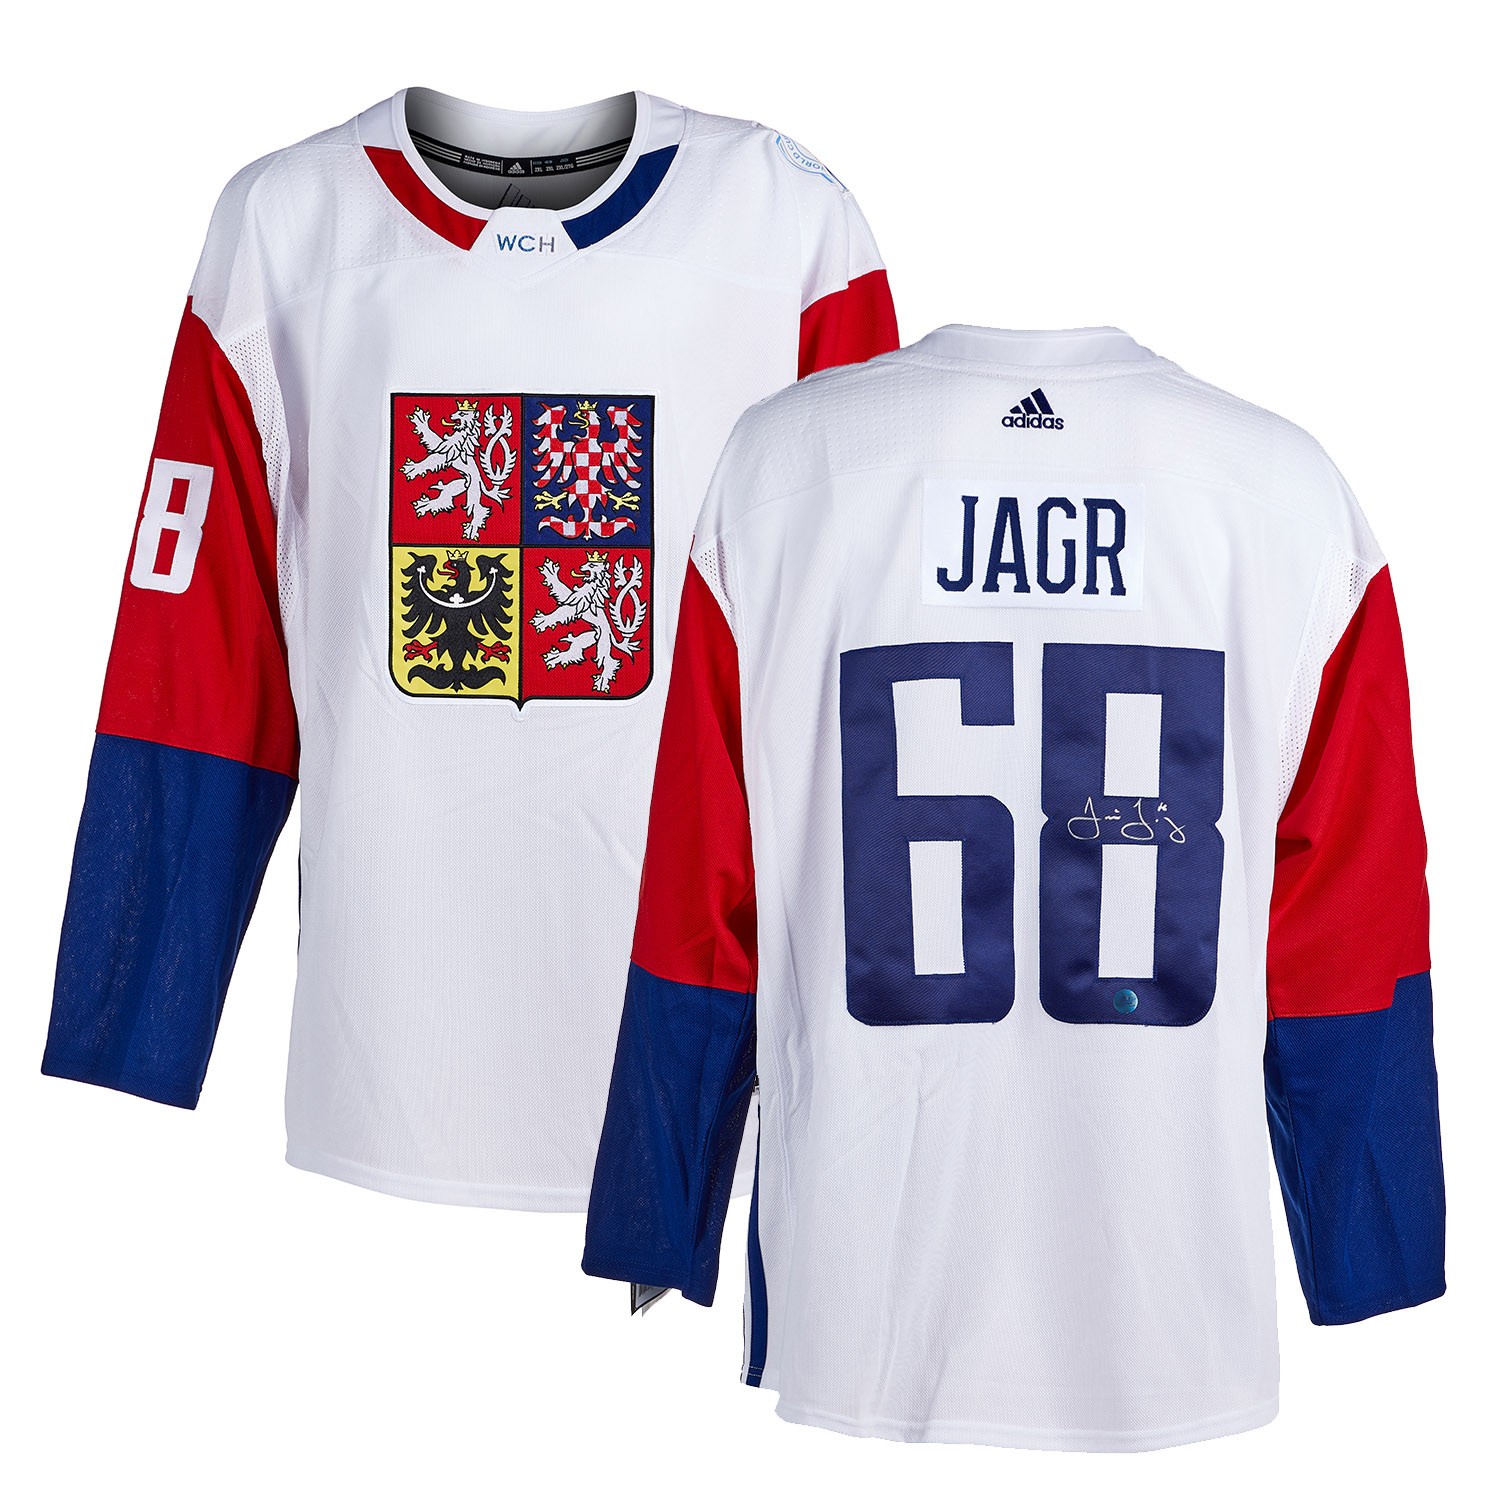 Jaromir Czech Autographed Signed World Cup Hockey Adidas